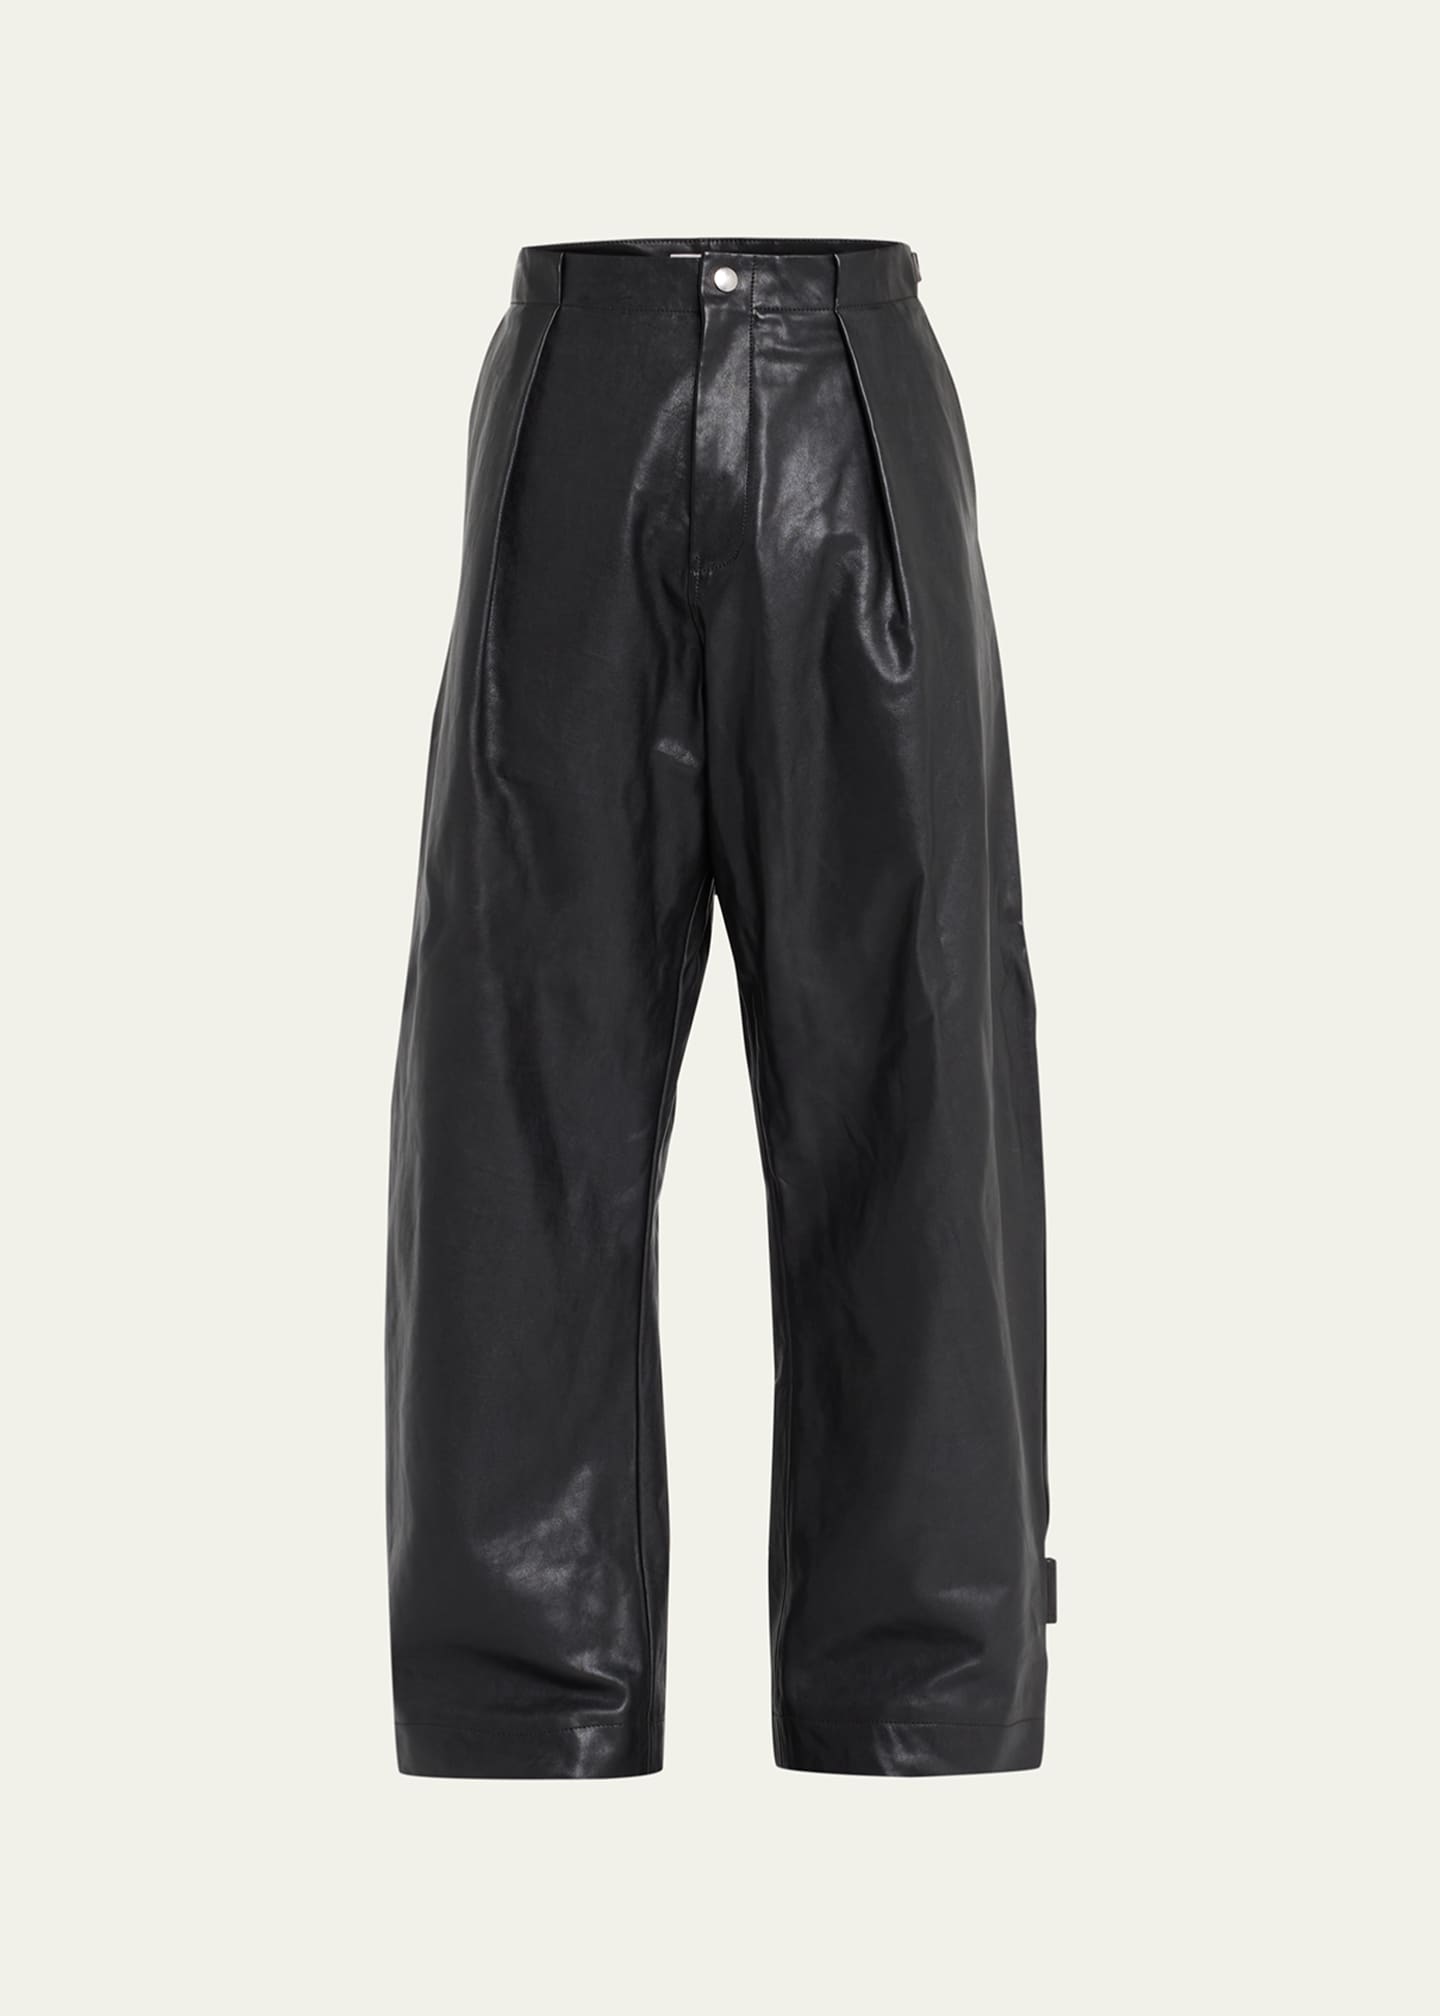 Burberry Men's Pleated Leather Pants - Bergdorf Goodman